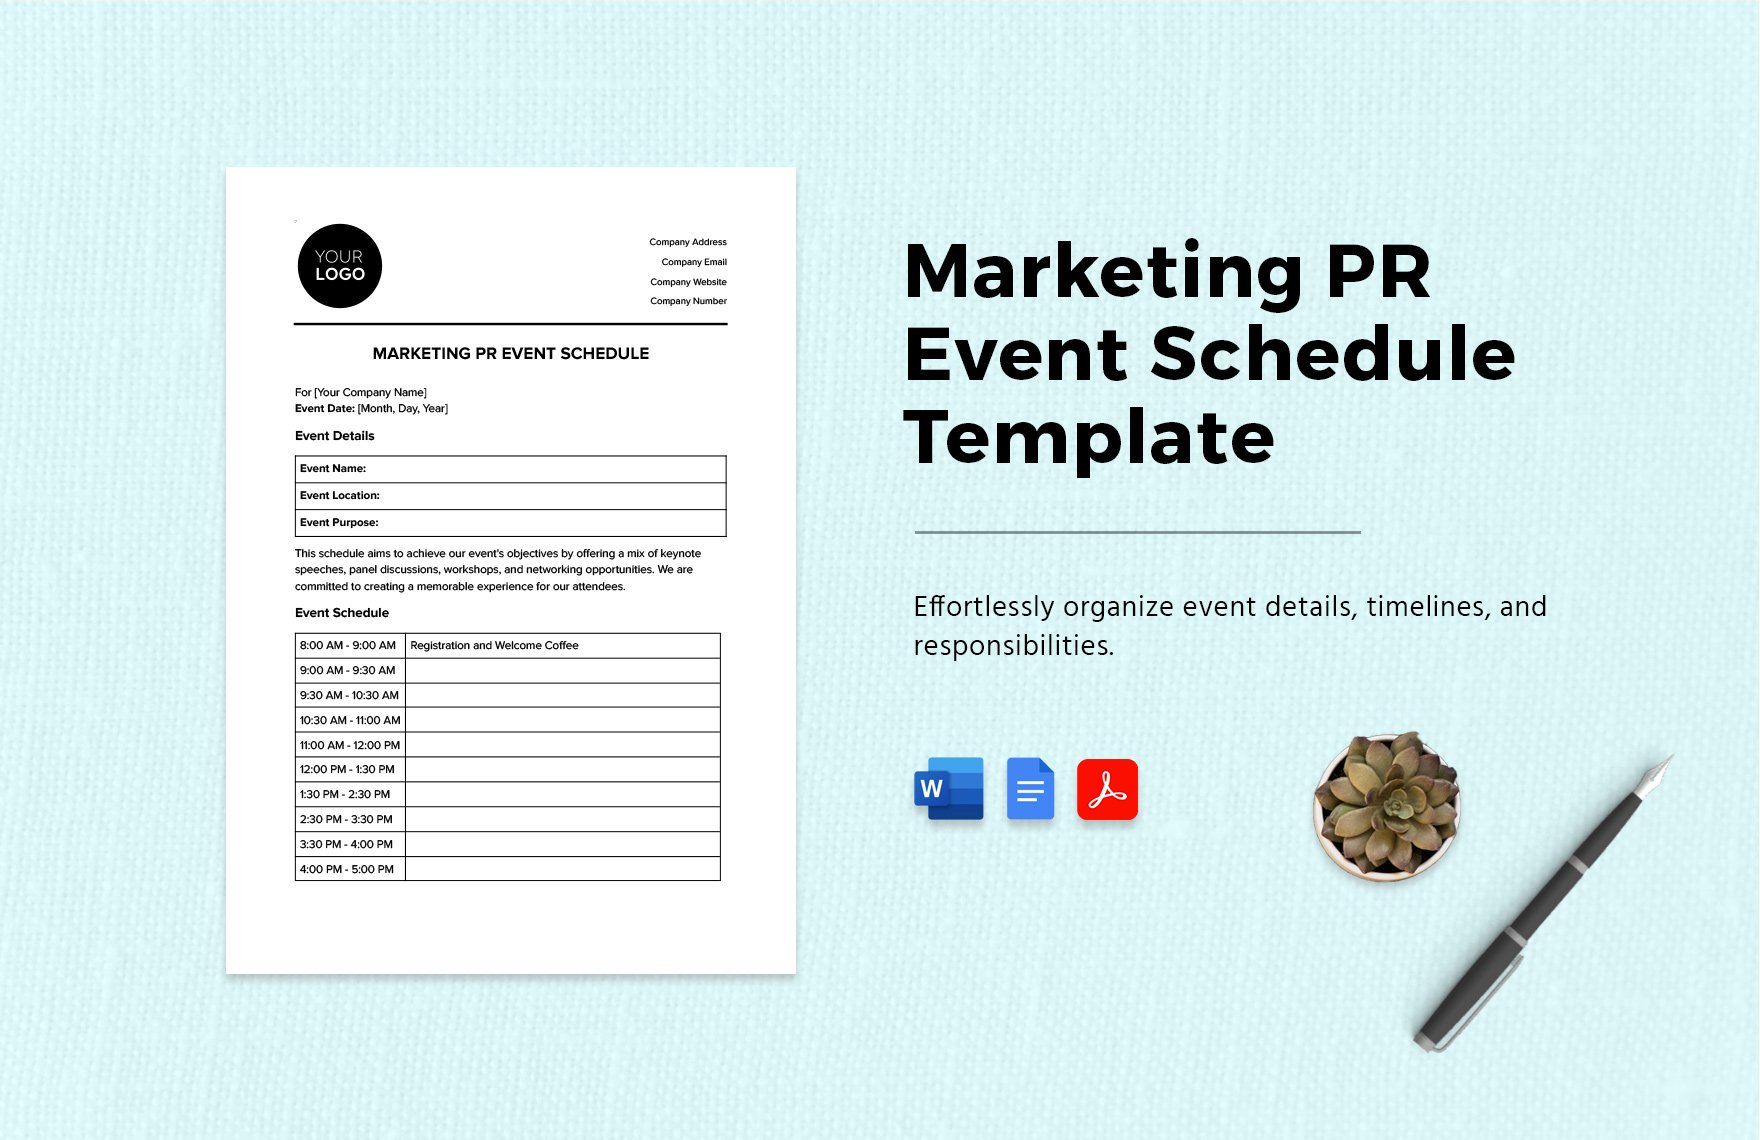 Marketing PR Event Schedule Template